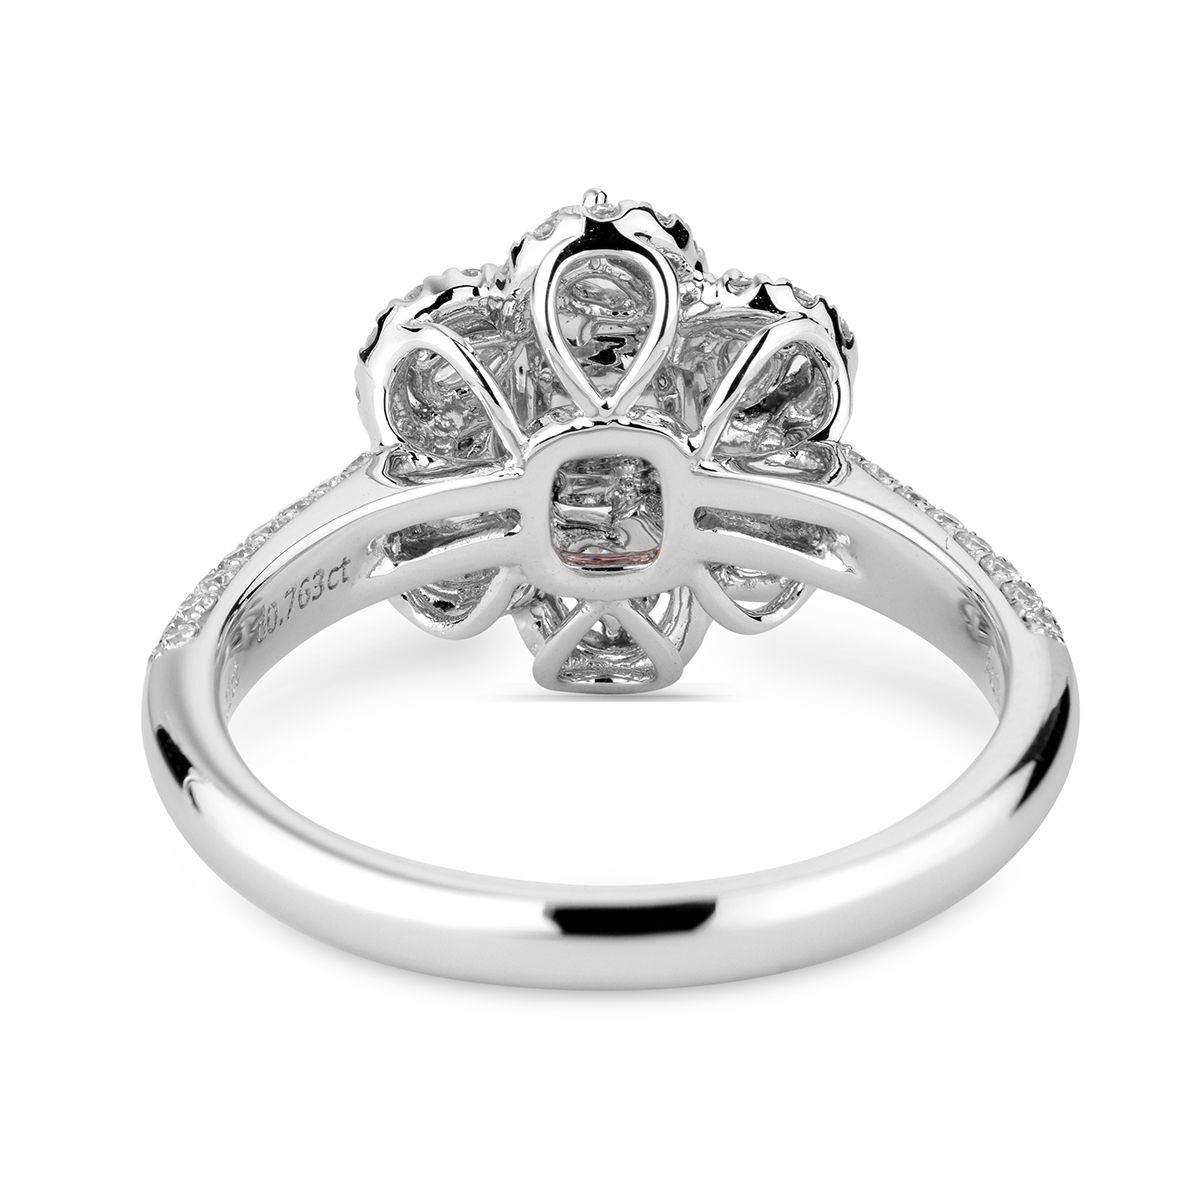 Very Light Pink Diamond Ring, 0.21 Ct. (0.97 Ct. TW), Cushion shape, GIA Certified, 5181029392